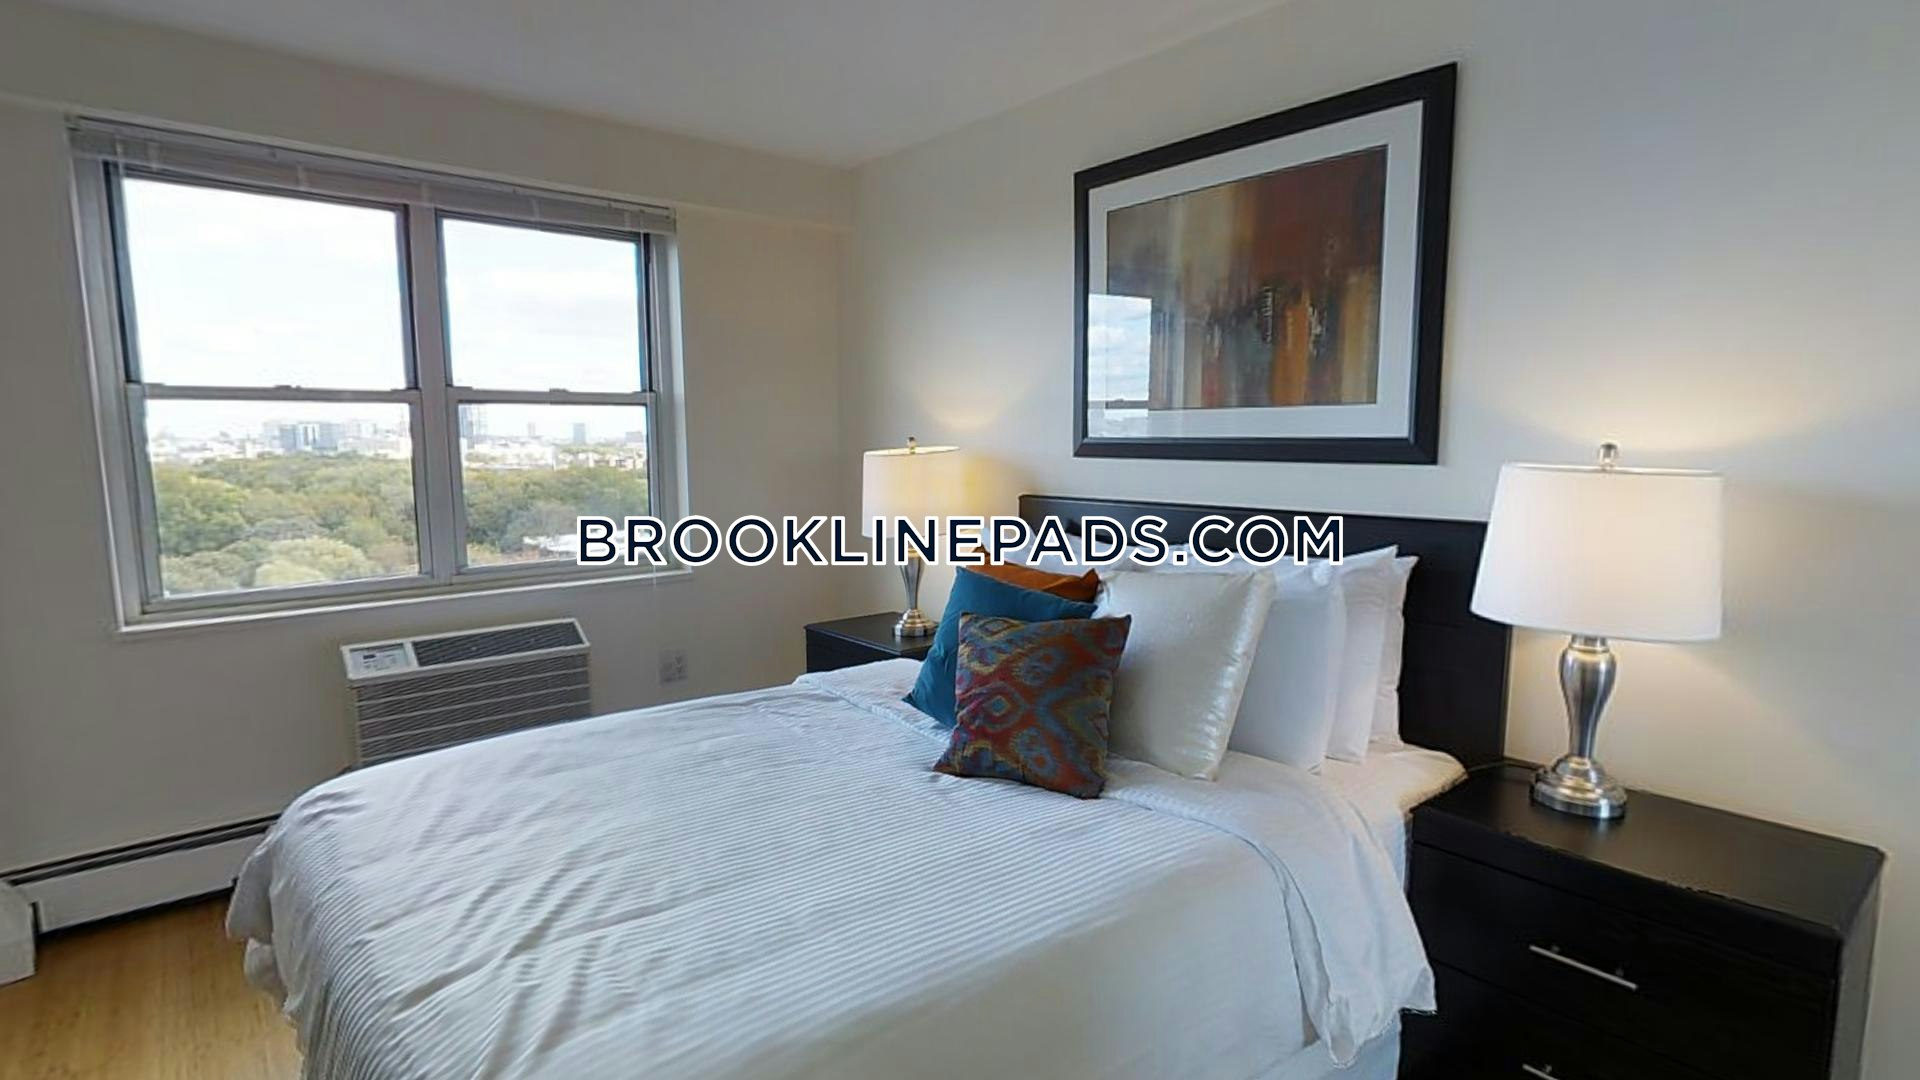 Brookline - $3,700